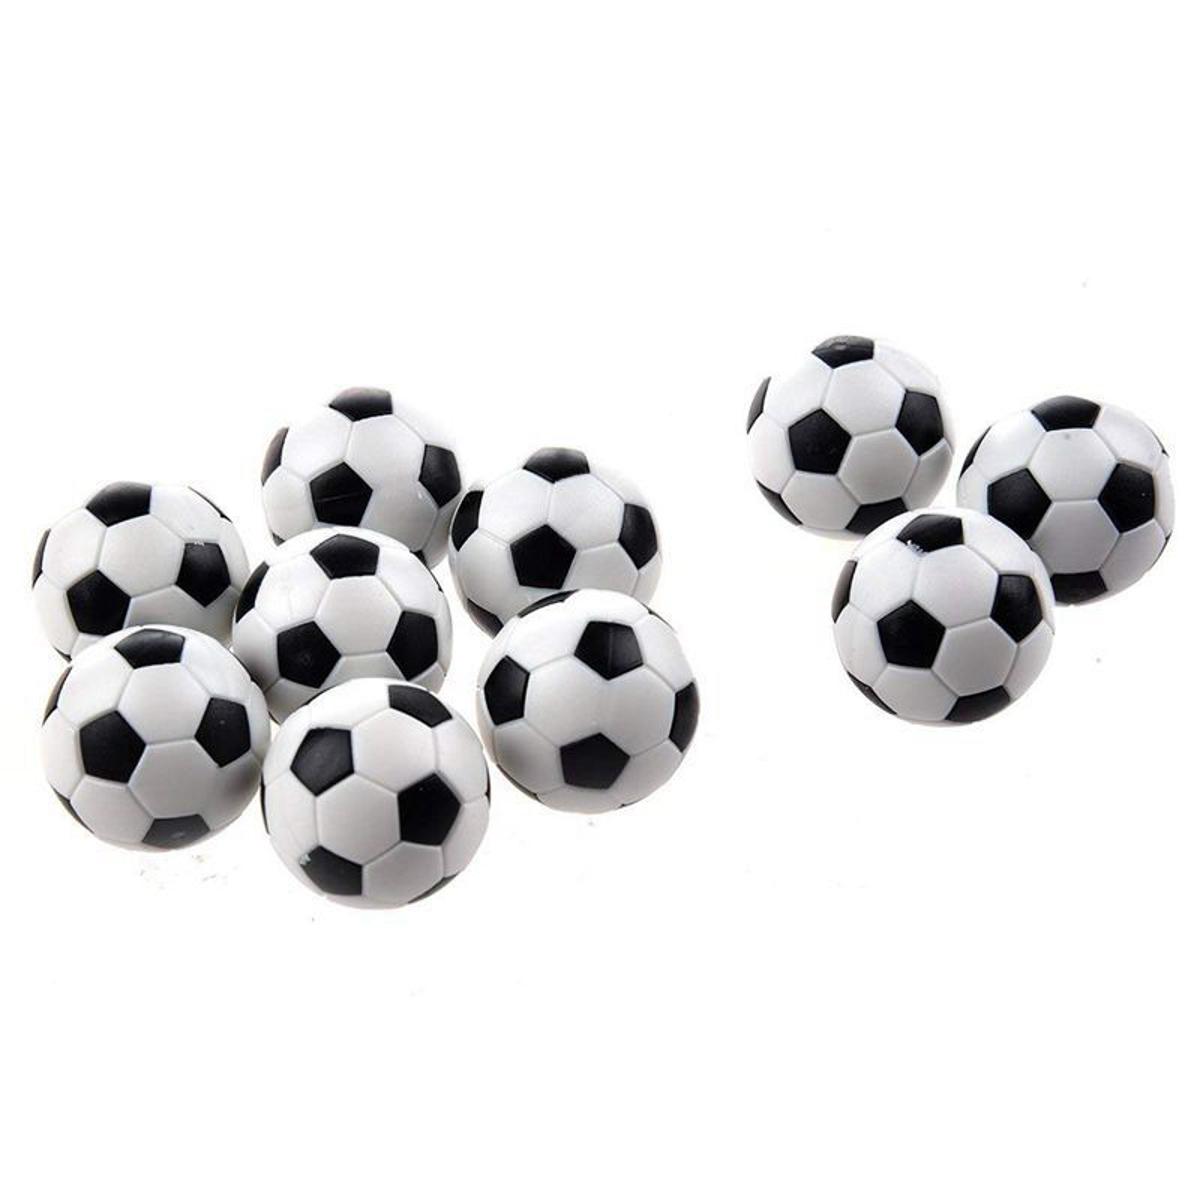 Football style Foosball balls